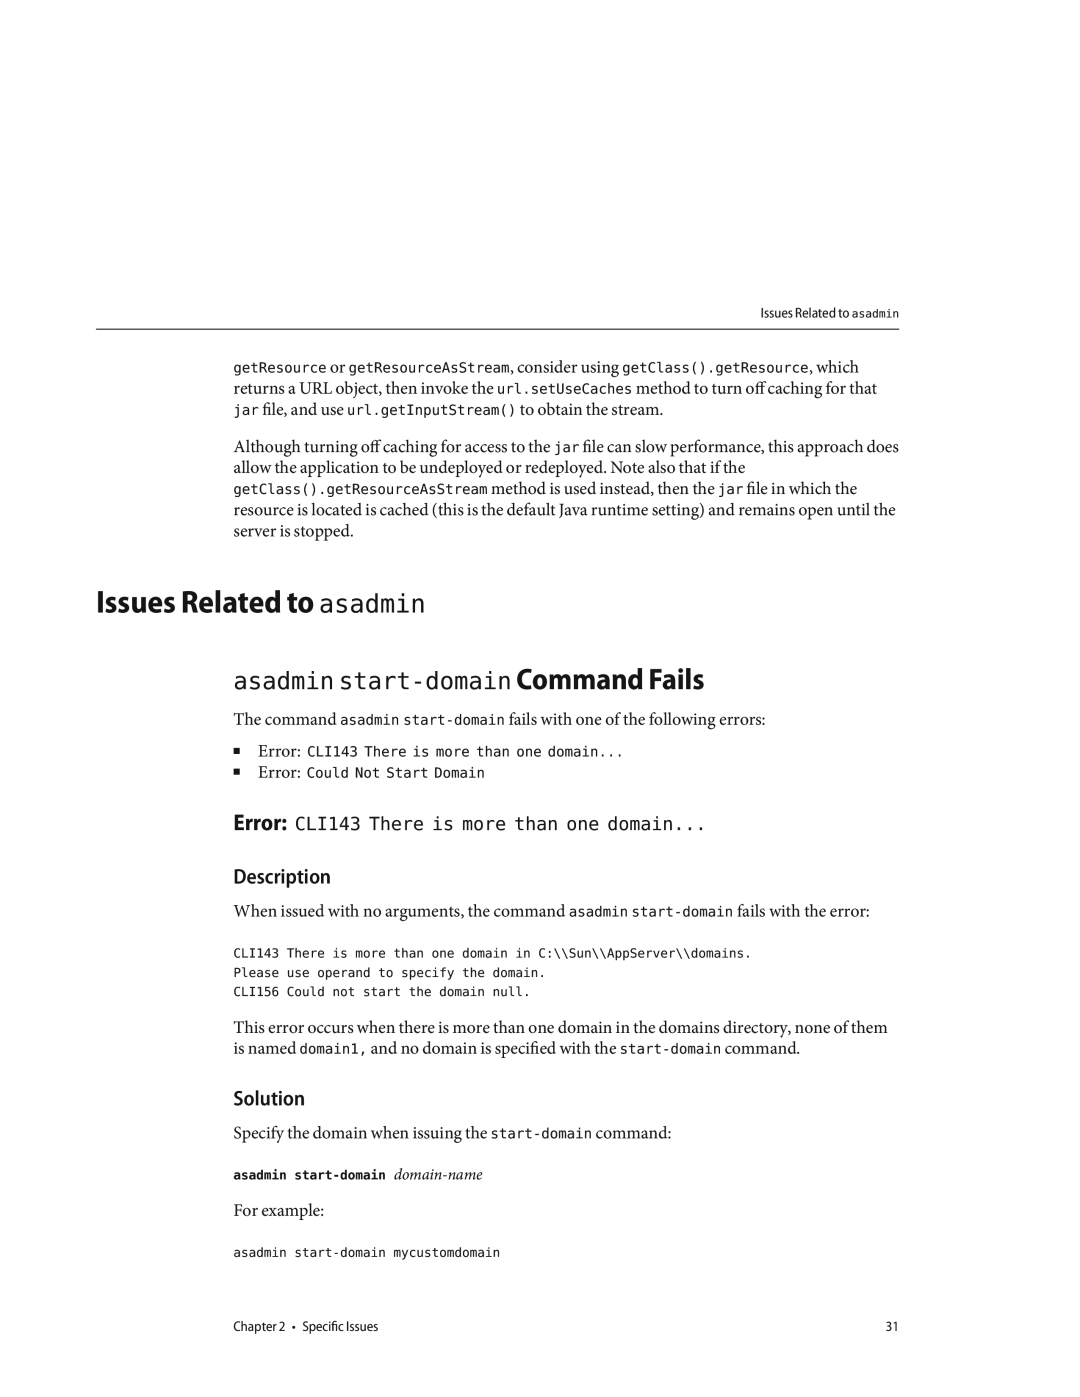 Sun Microsystems 820682310 manual Issues Related to asadmin, asadmin start-domain Command Fails, Description, Solution 